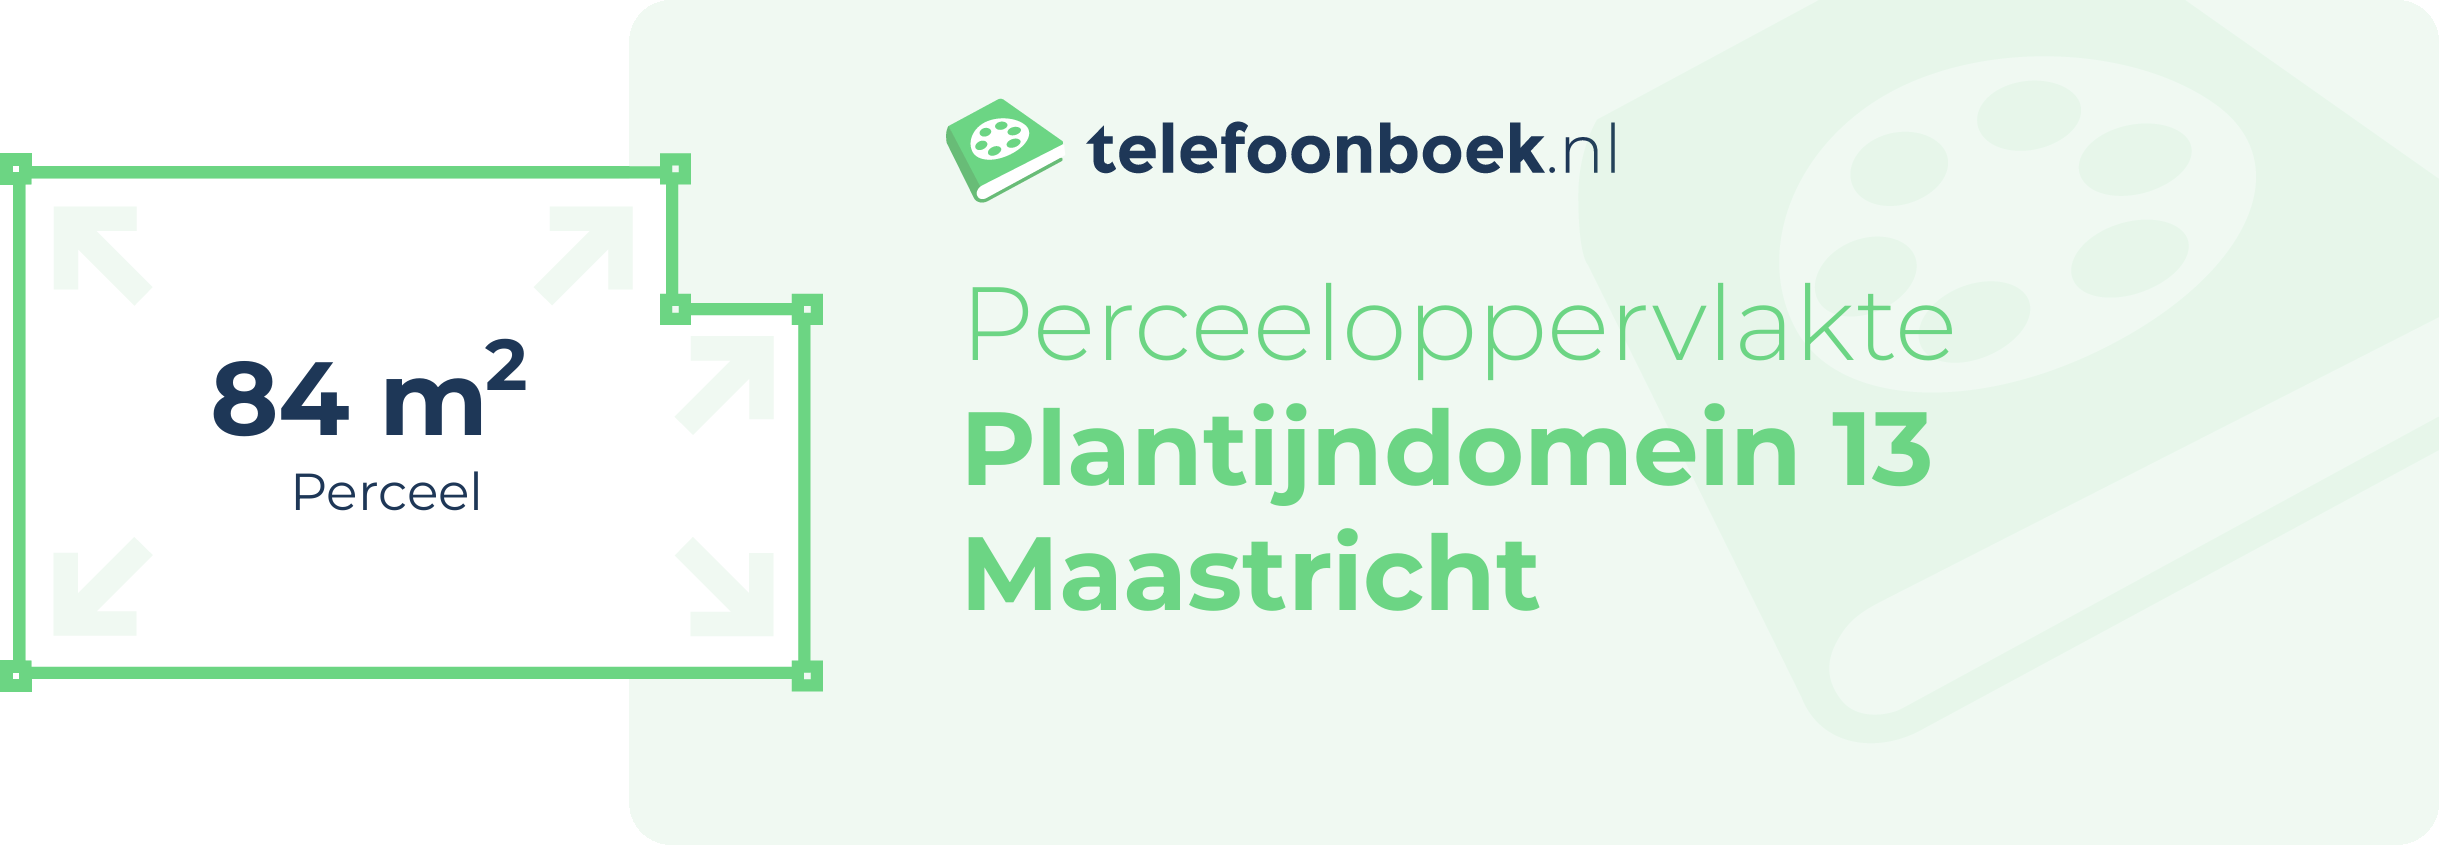 Perceeloppervlakte Plantijndomein 13 Maastricht